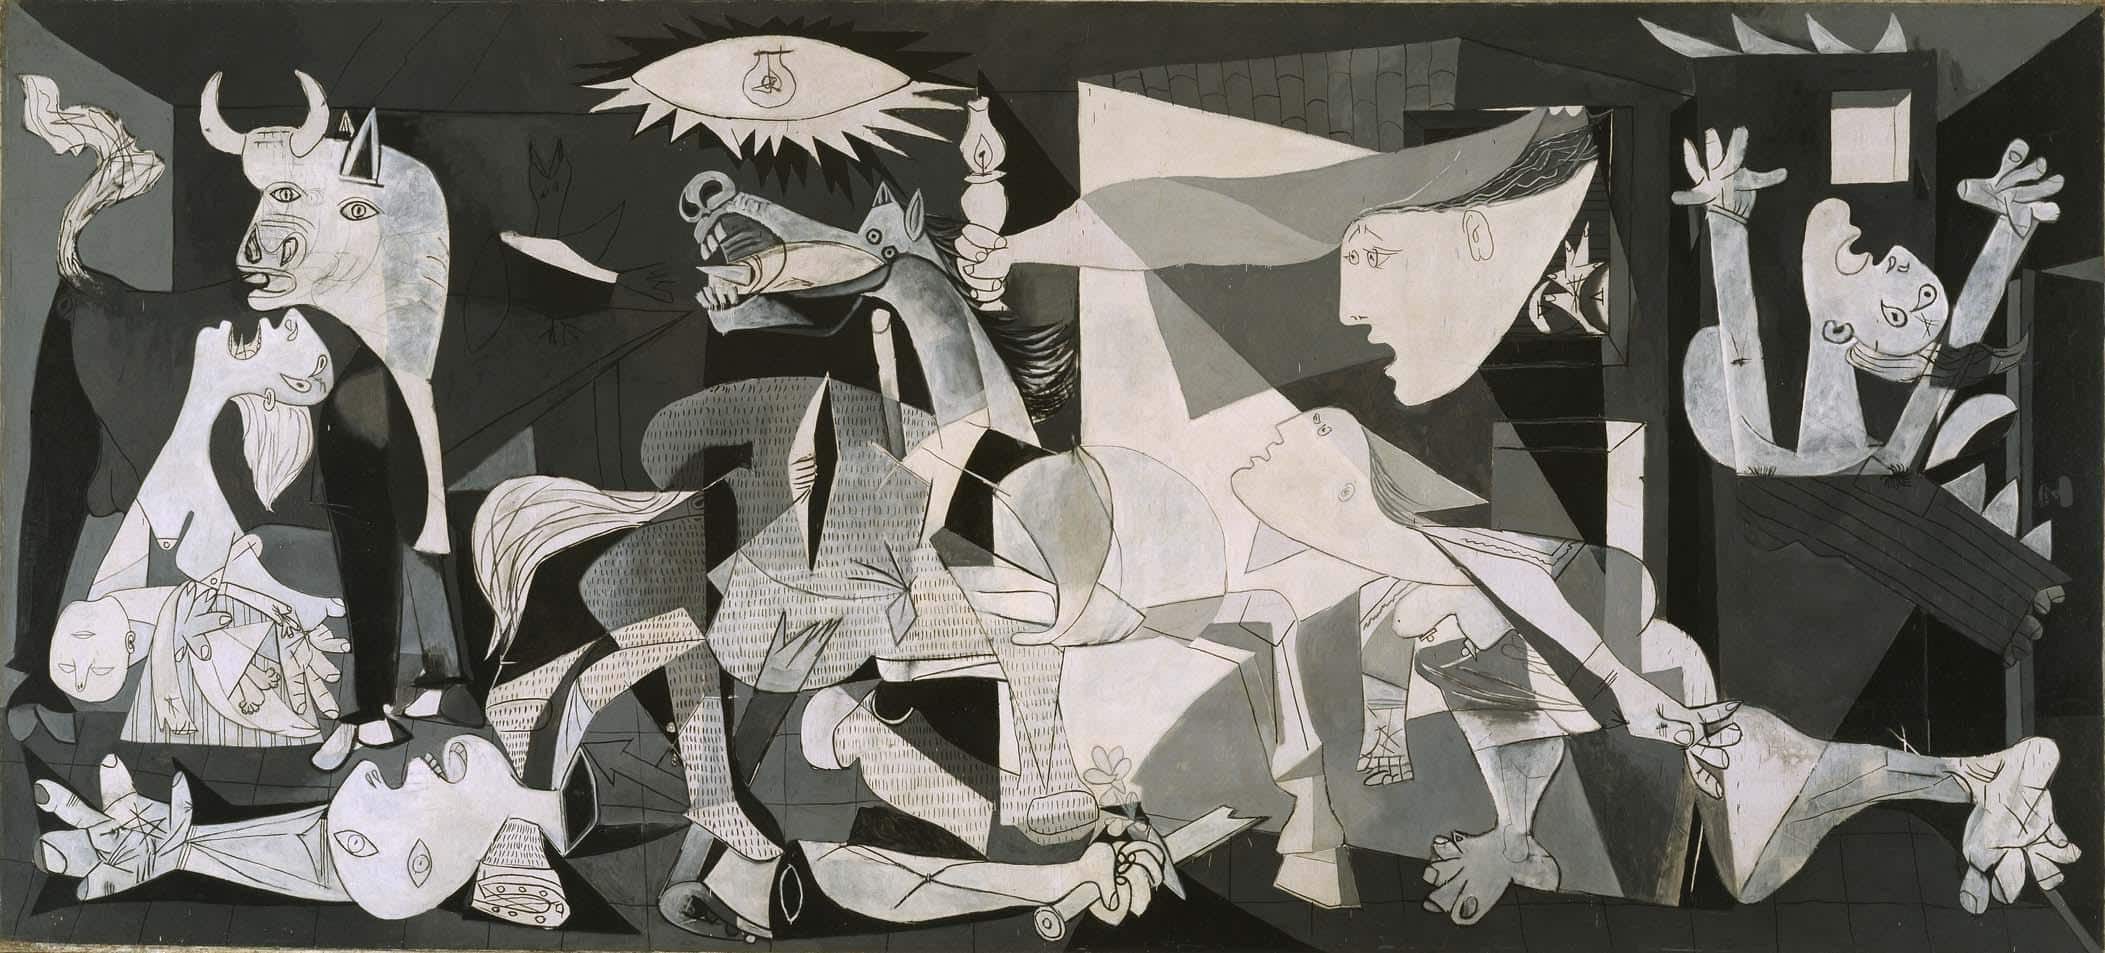 Efemérides 26 de abril | El bombardeo de Guernica